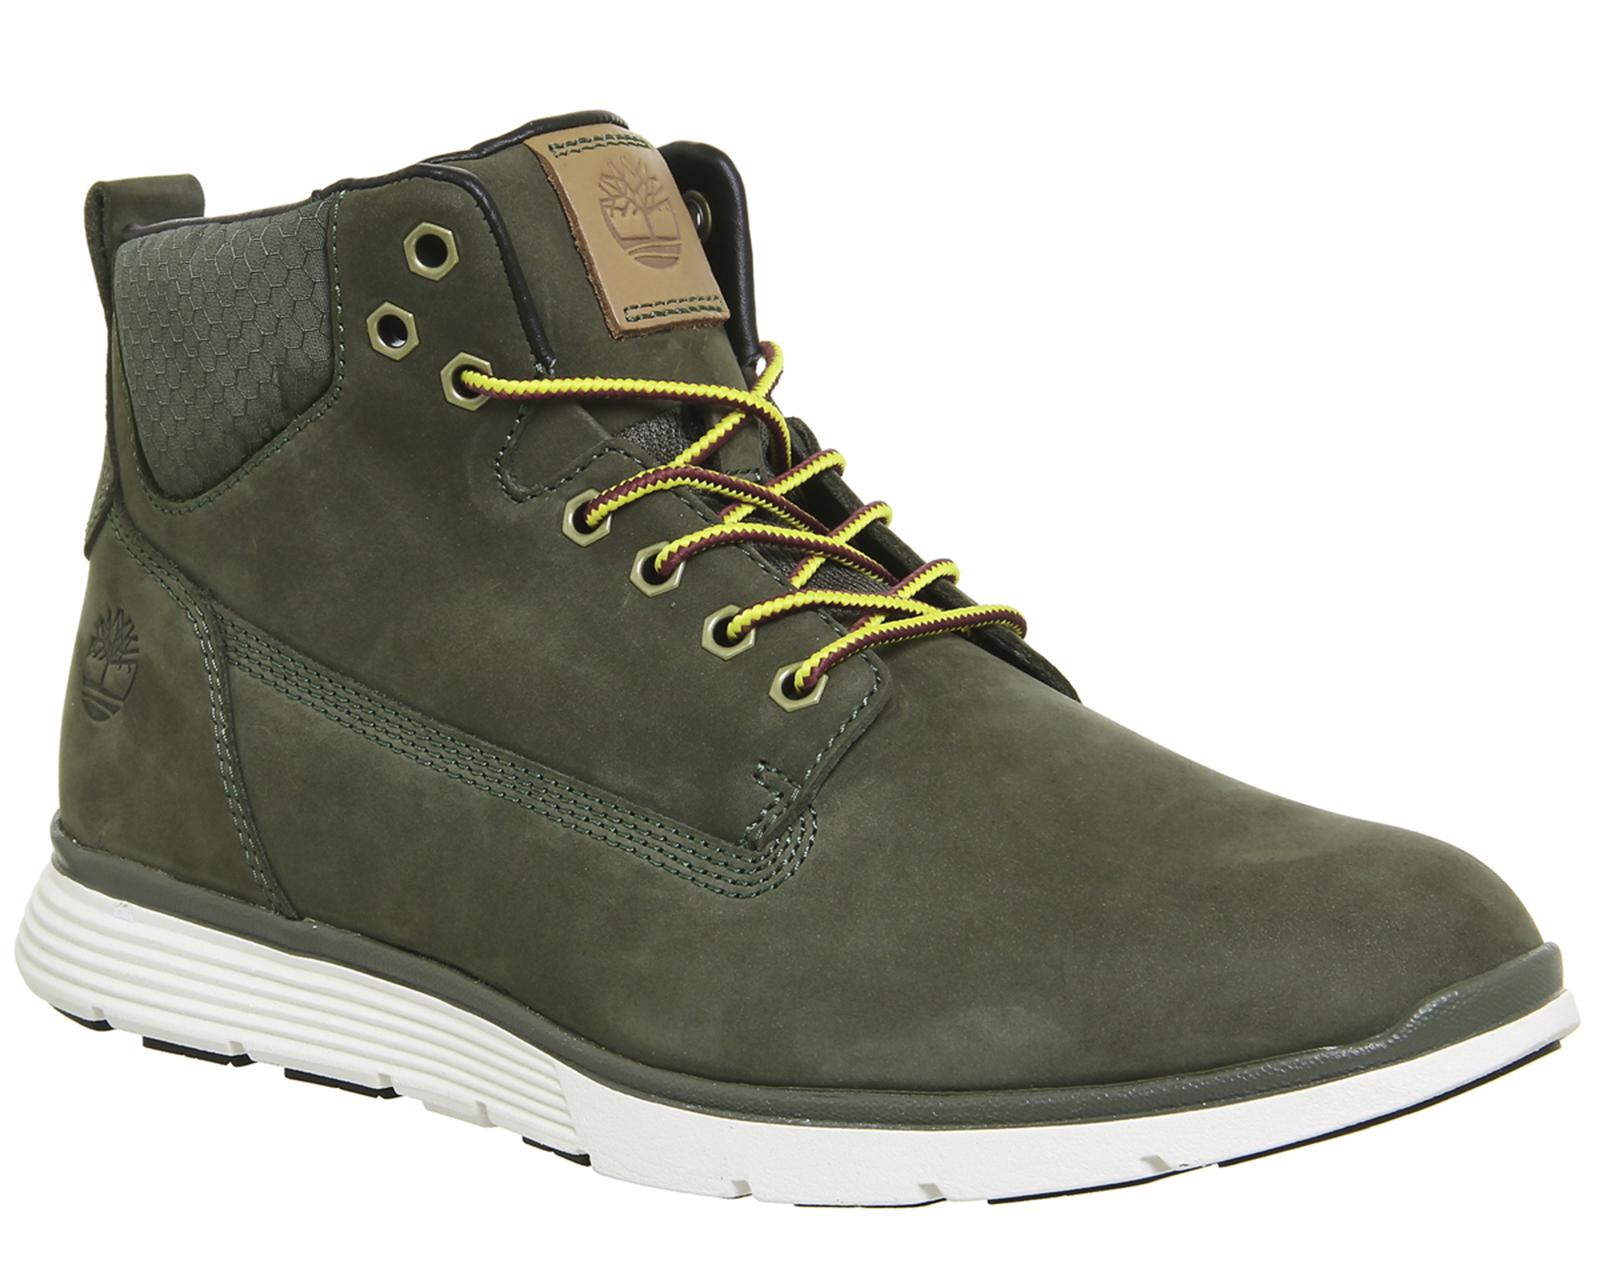 Lyst - Timberland Killington Chukka Boots in Green for Men